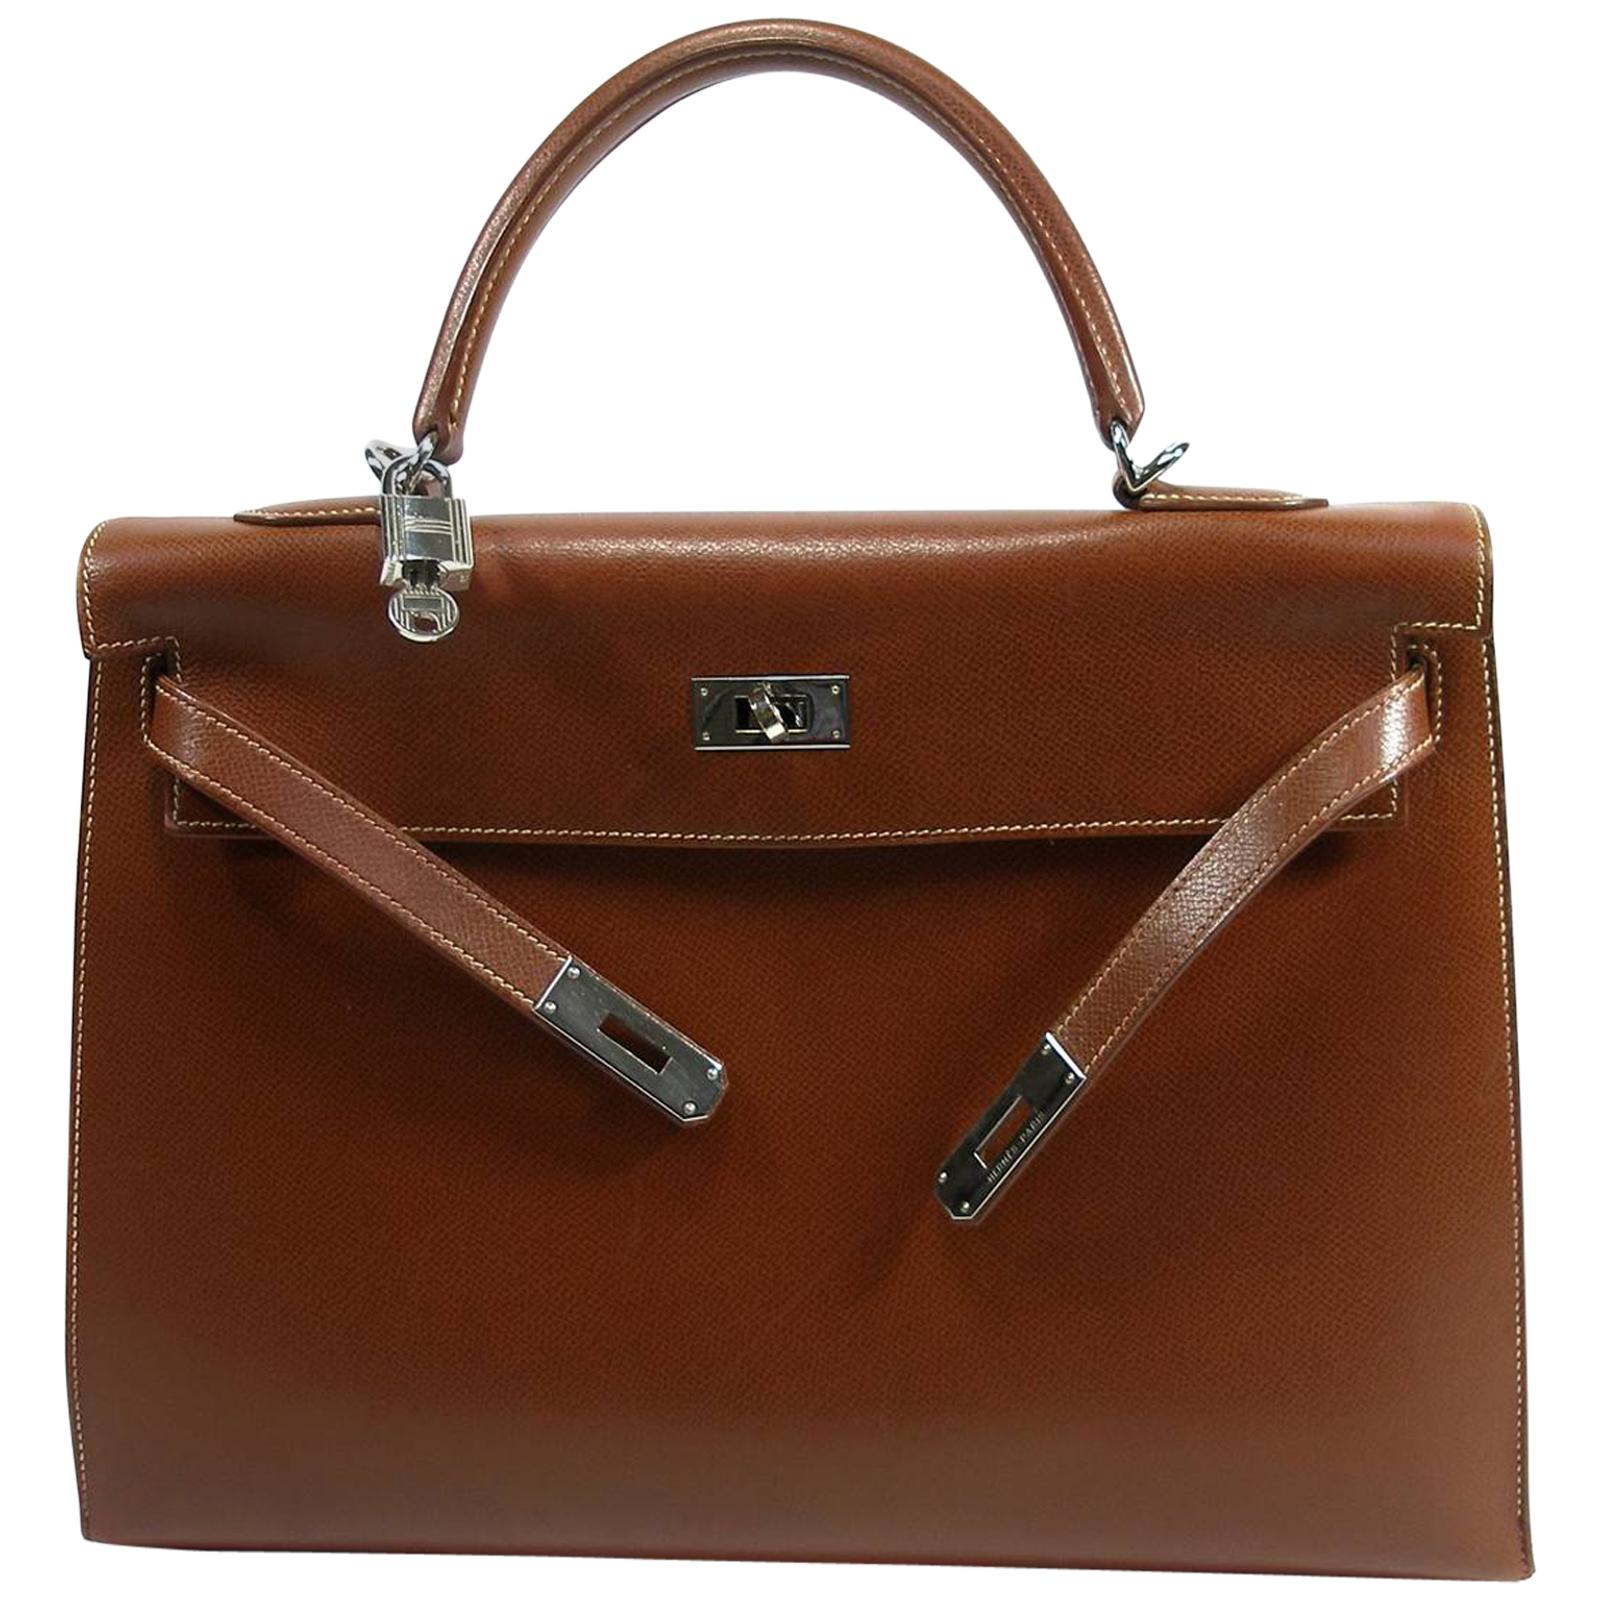 Hermès kelly Bag 2 / 35 cm Sellier Leather Grainé Brown 2003 / Good Condition 